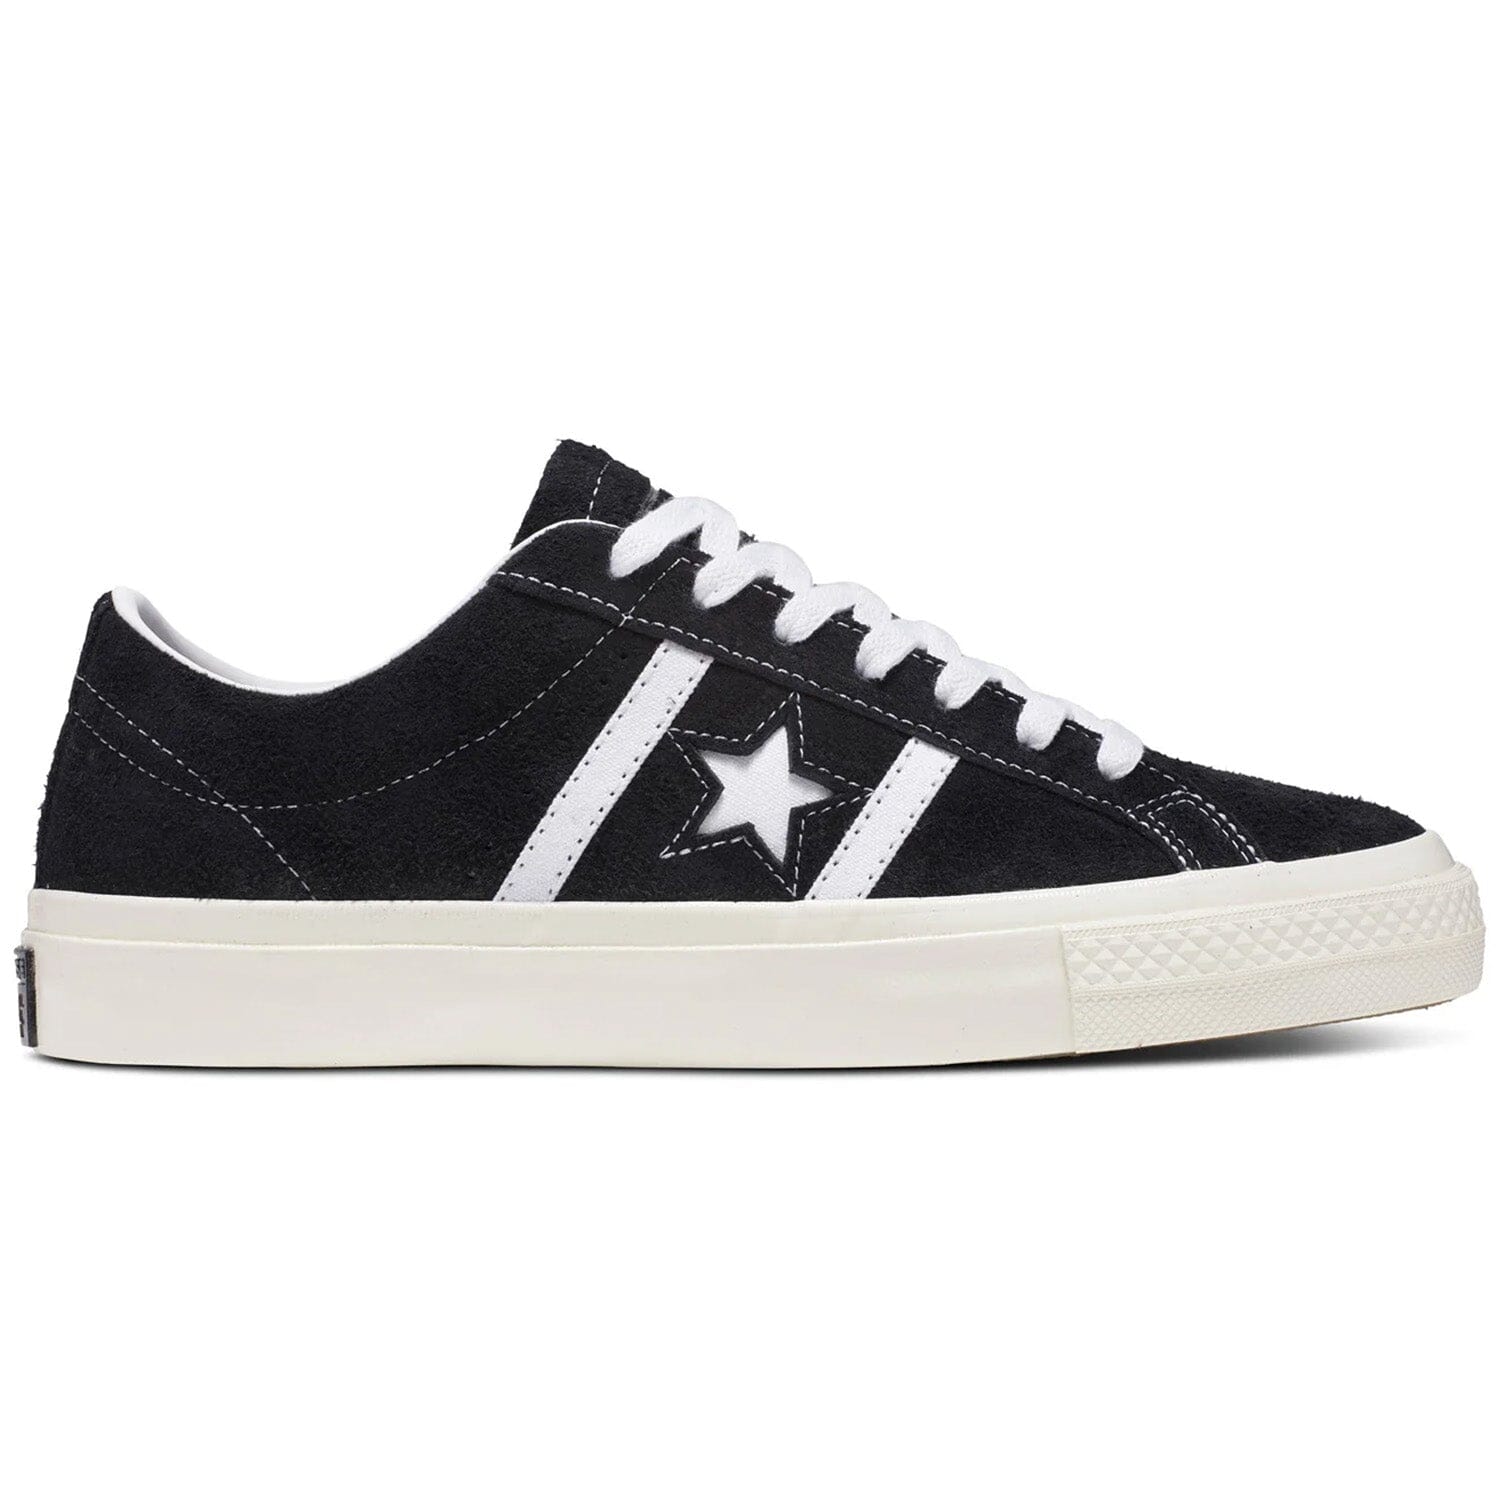 Converse One Star Academy Black/Egret footwear Converse 